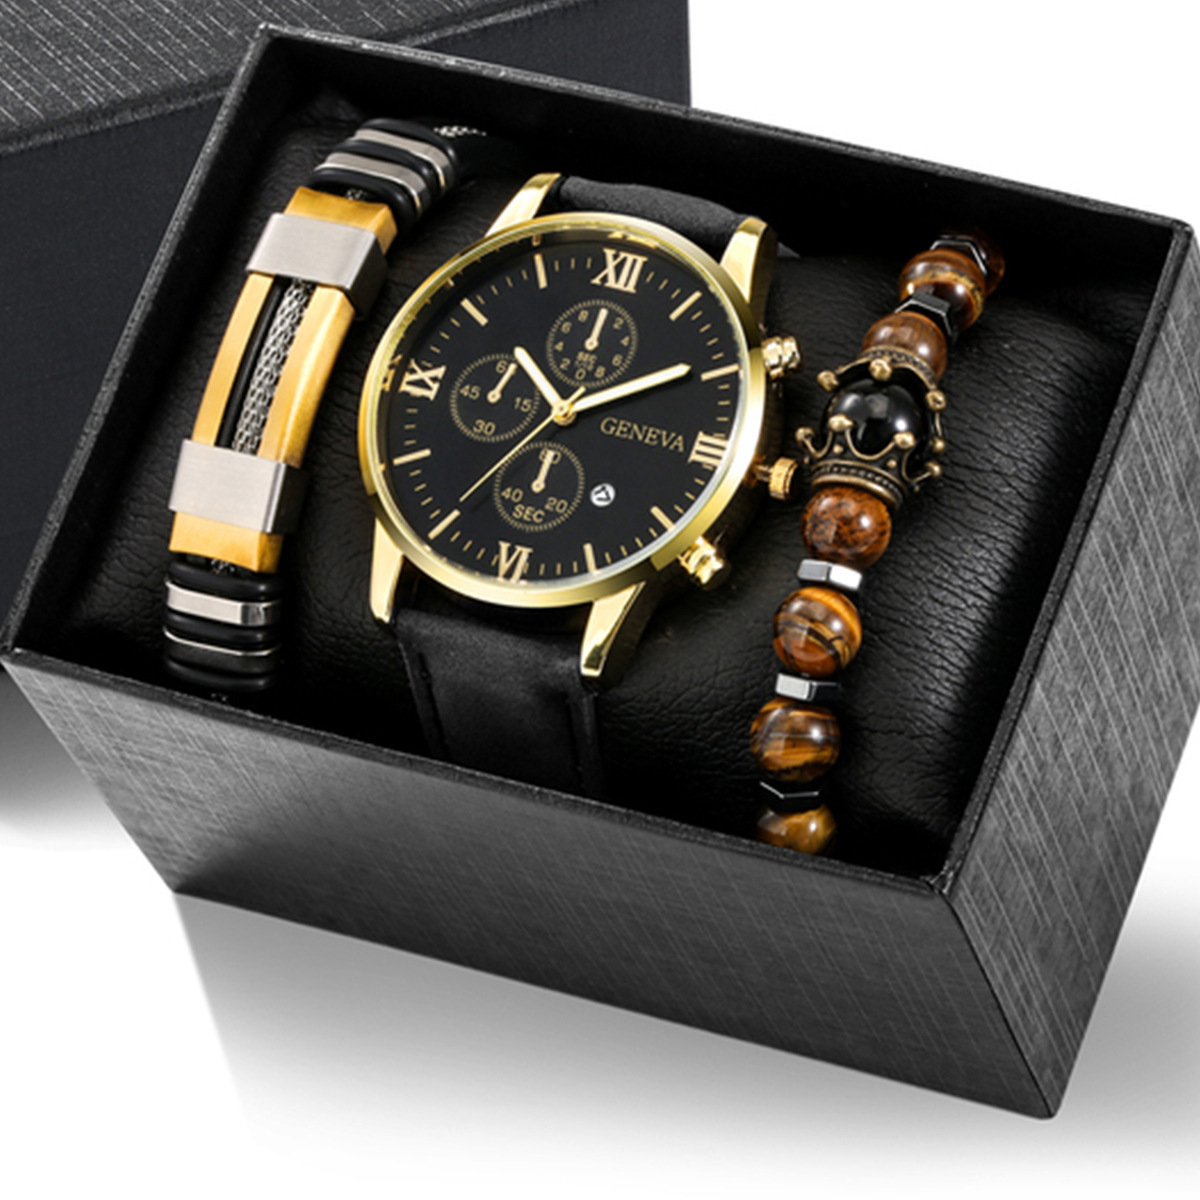 Men's watch and two elegant bracelets gift set of 3 pieces-BUNNYKACHU